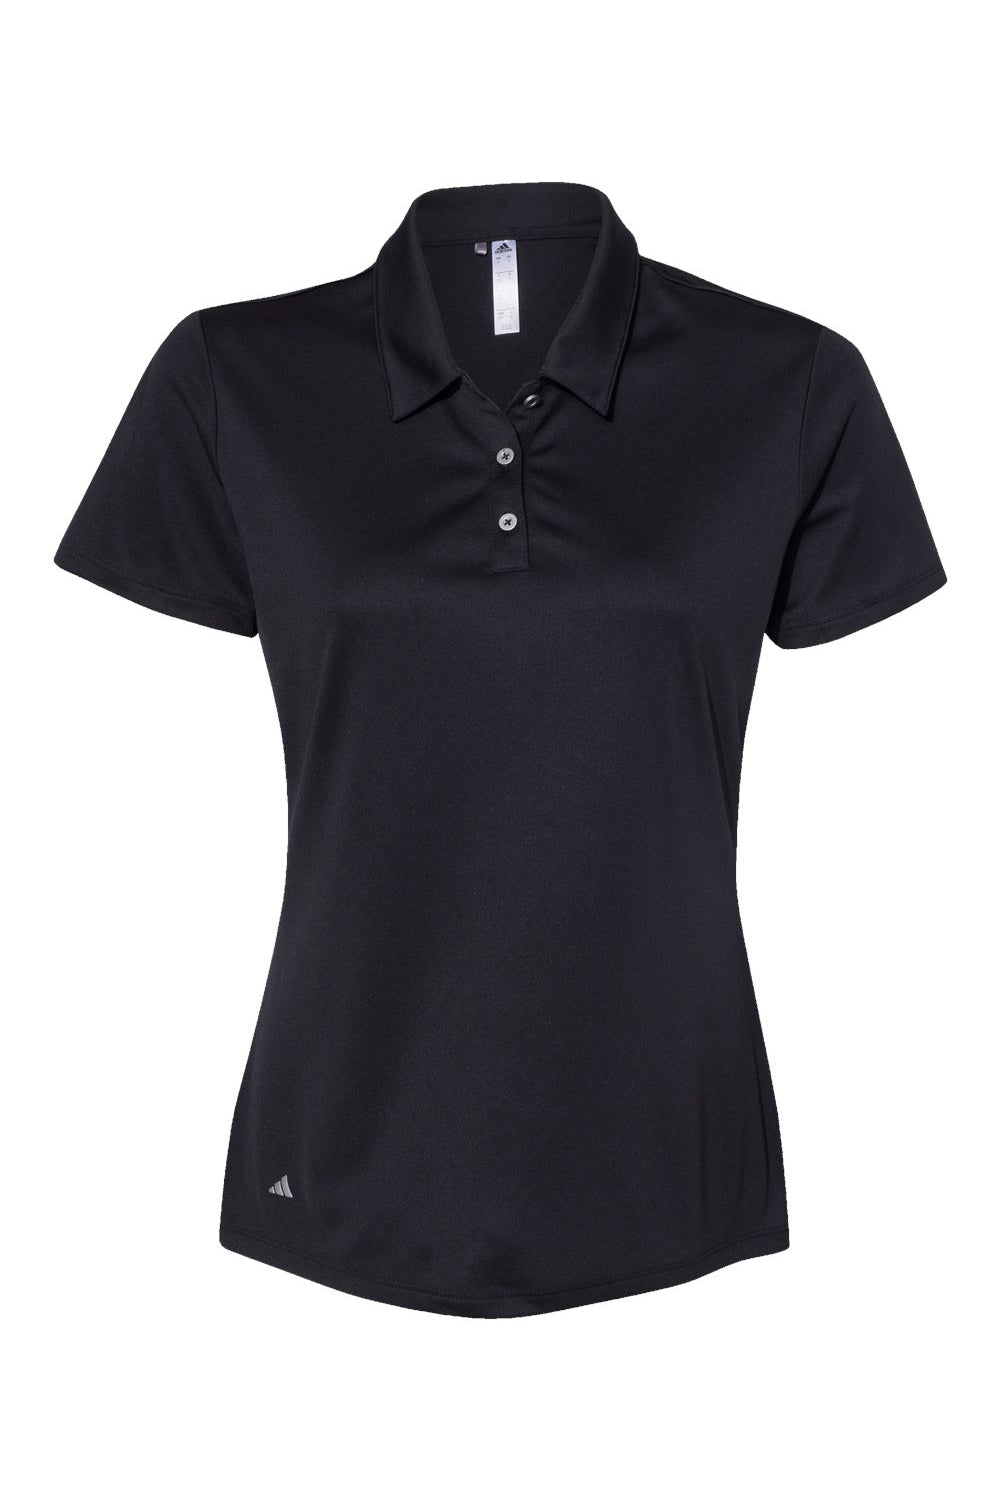 Adidas A231 Womens Performance Short Sleeve Polo Shirt Black Flat Front